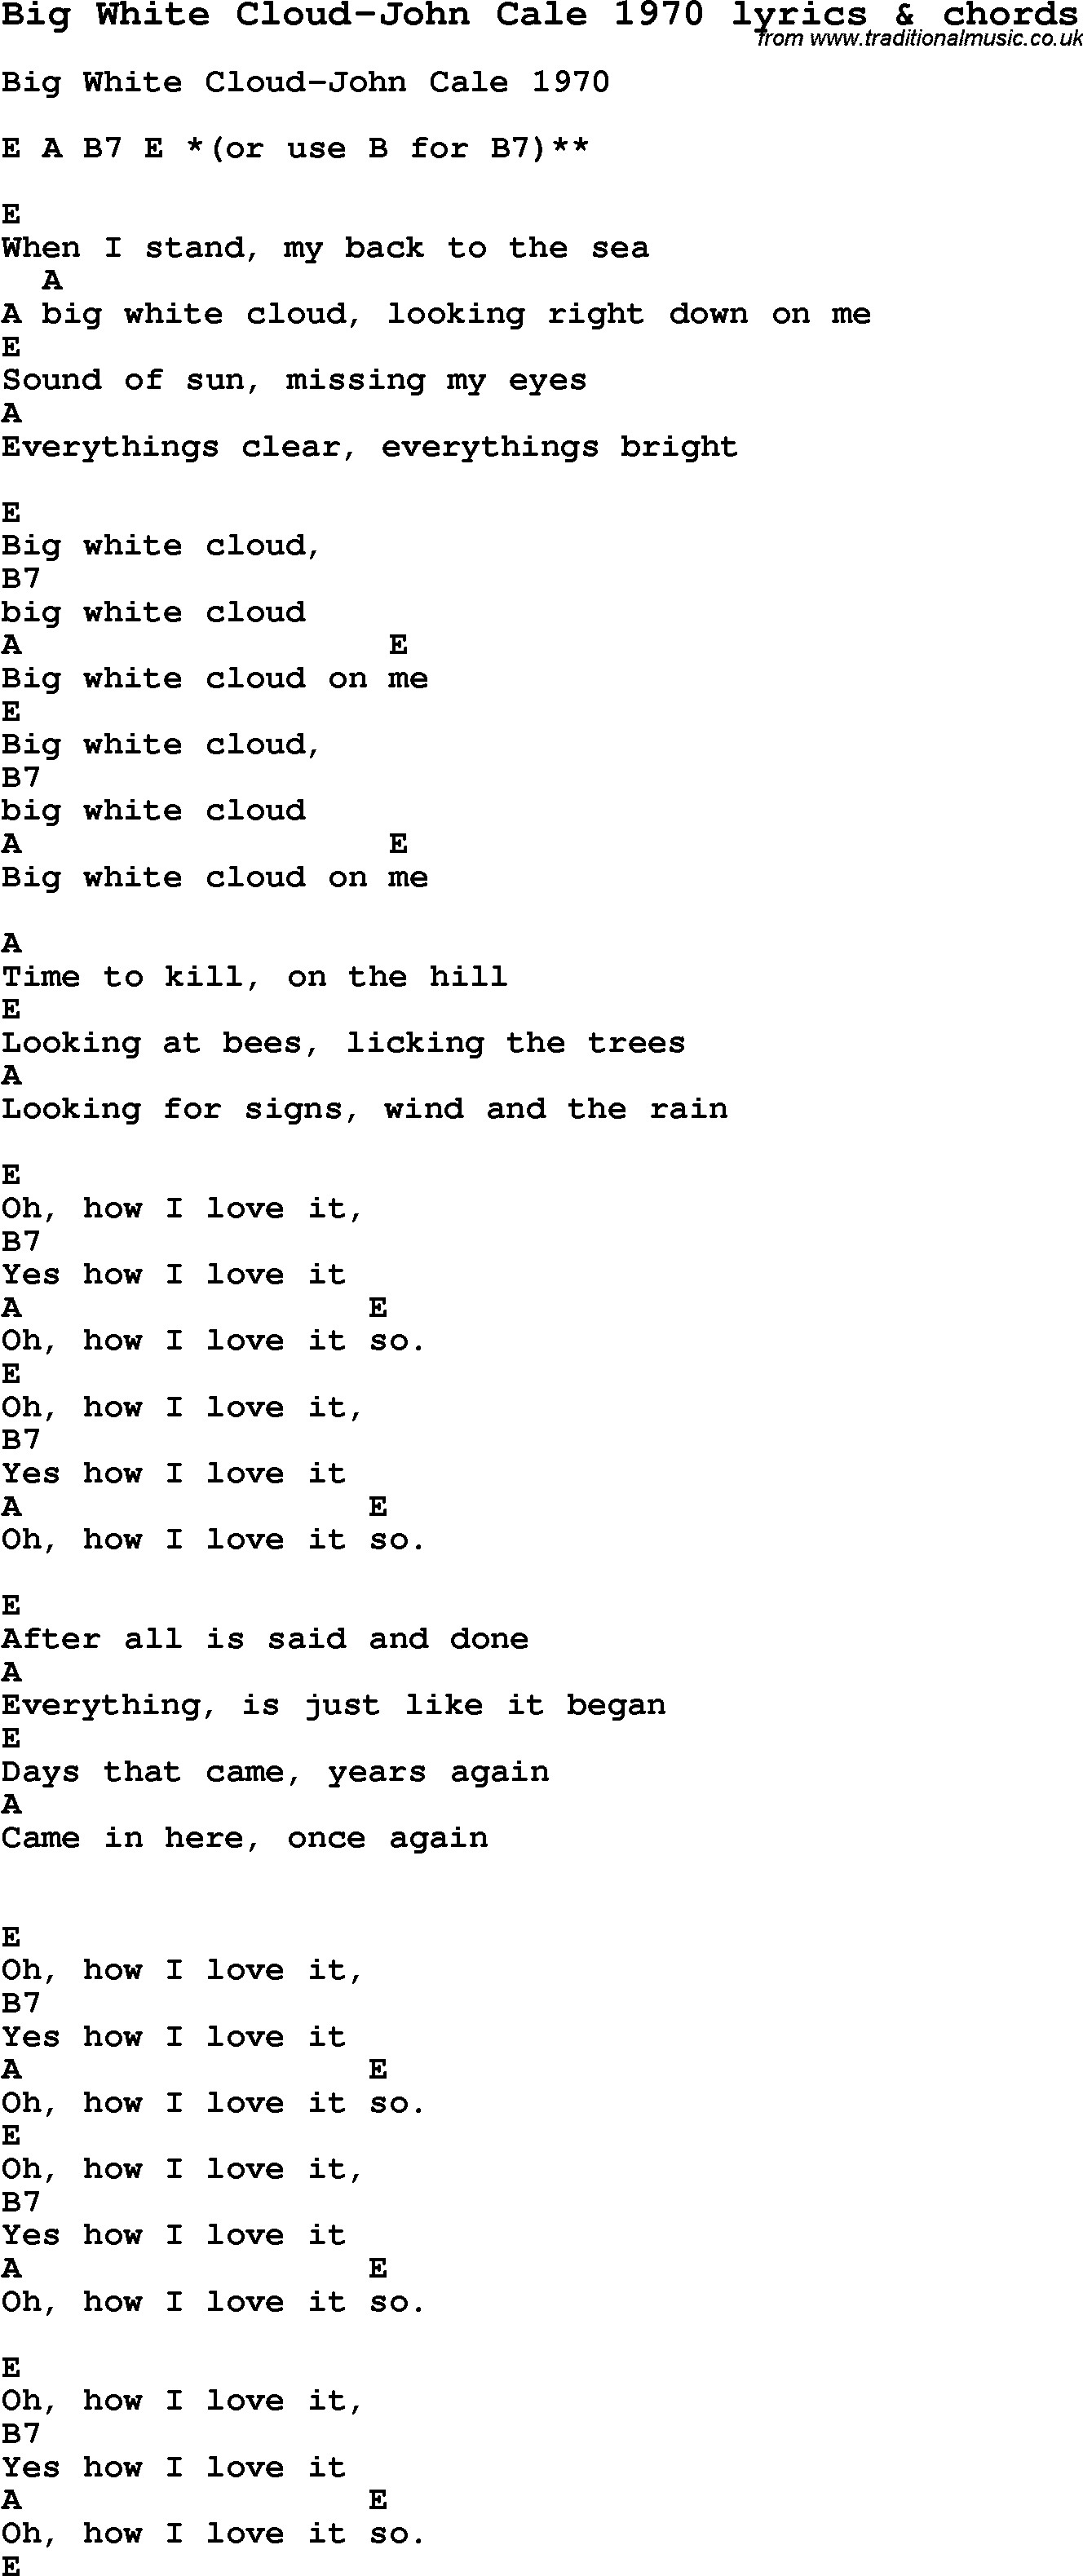 Love Song Lyrics for: Big White Cloud-John Cale 1970 with chords for Ukulele, Guitar Banjo etc.